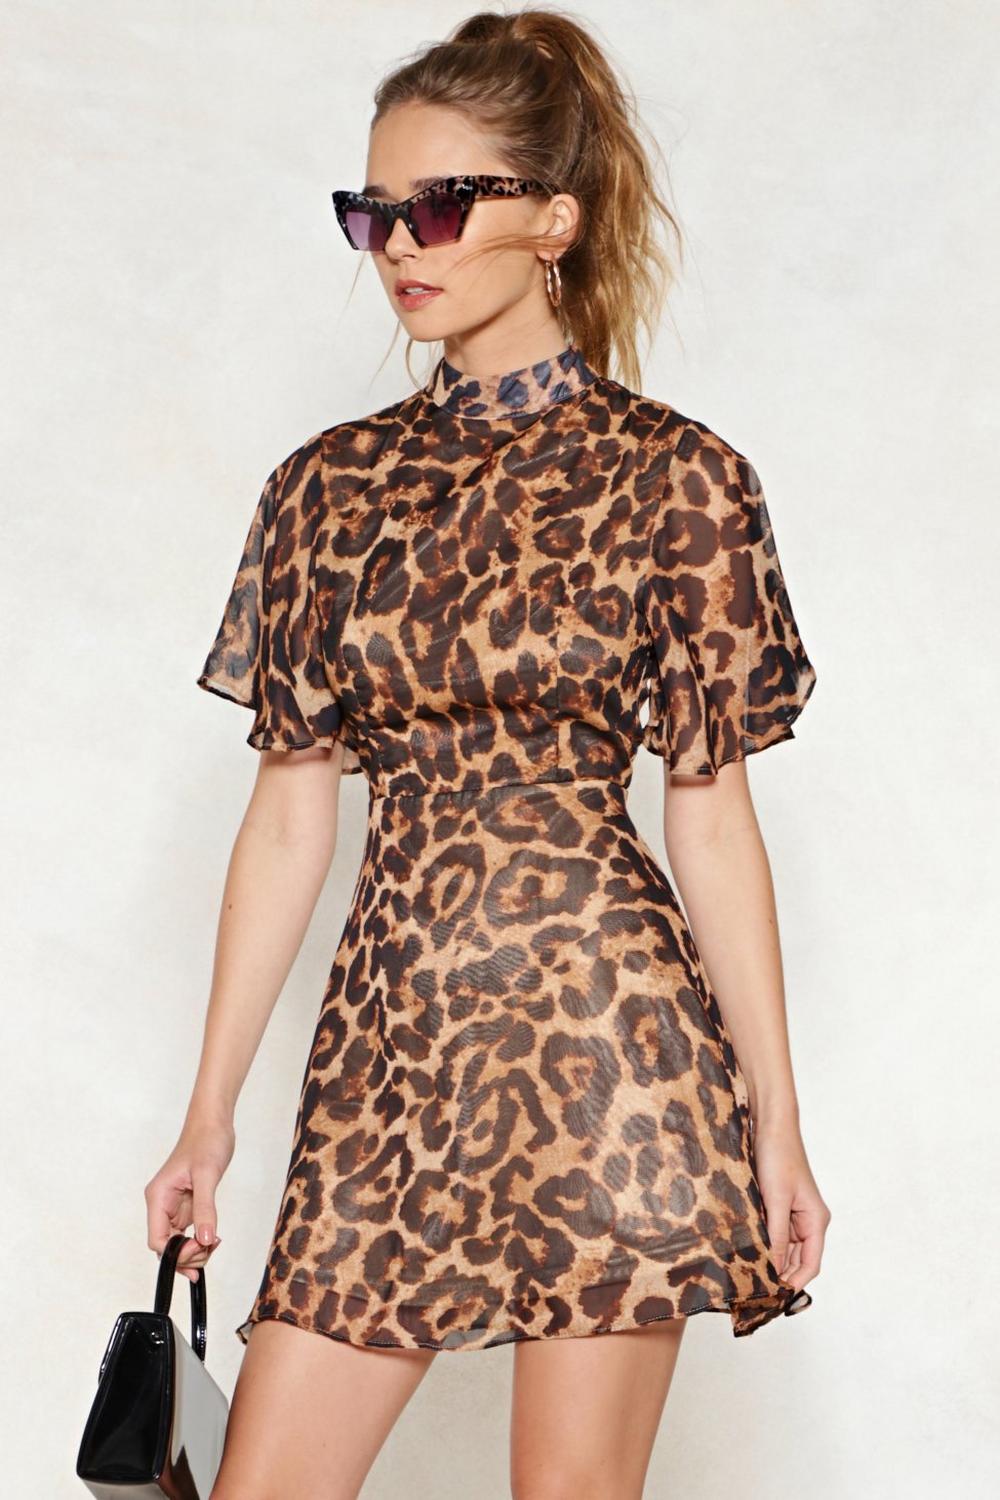 Feline This Leopard Dress